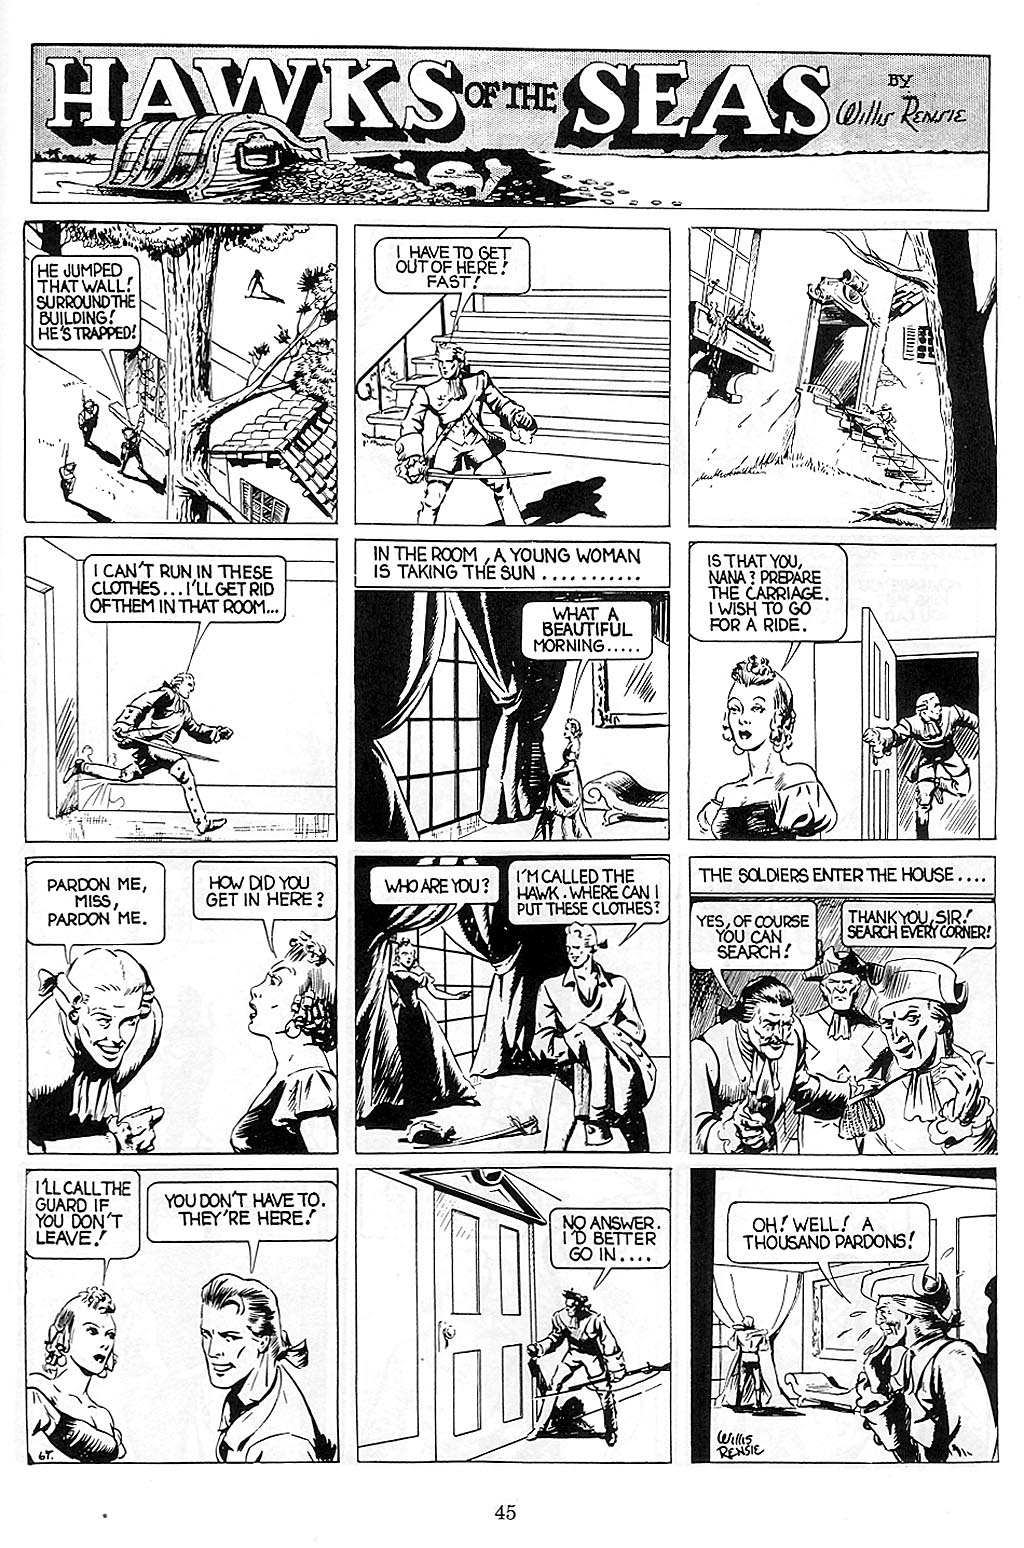 Read online Will Eisner's Hawks of the Seas comic -  Issue # TPB - 46